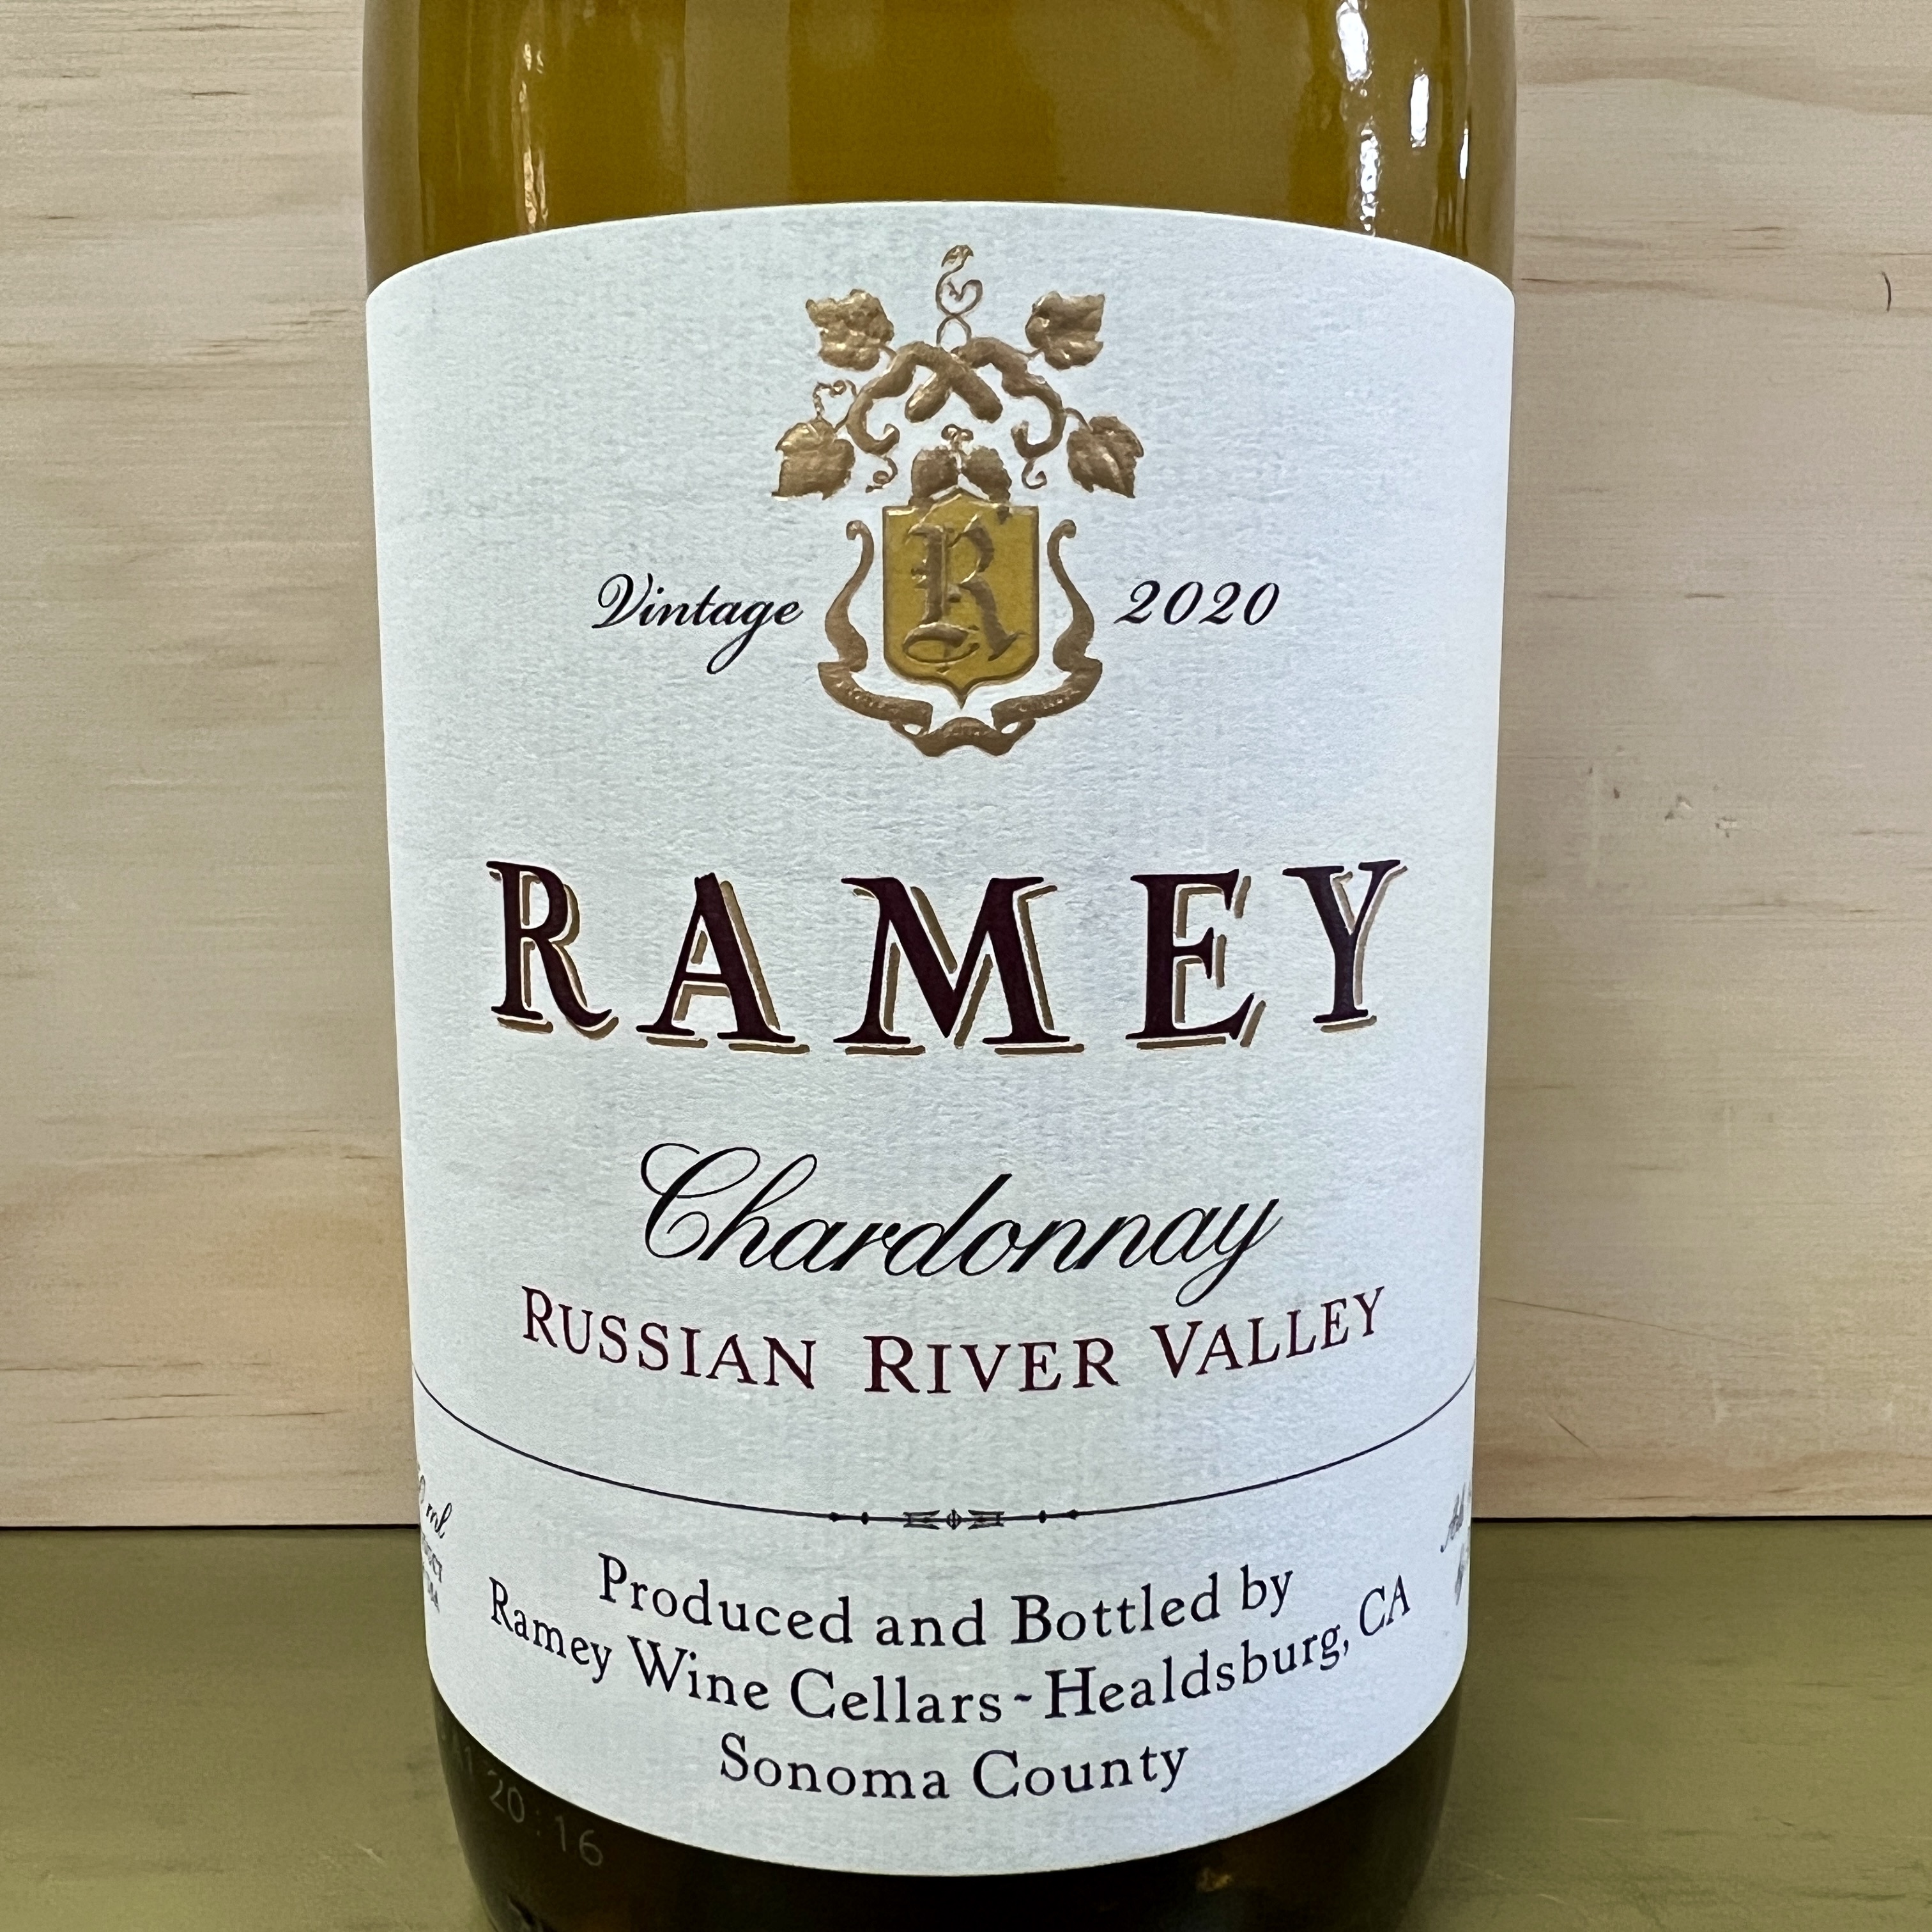 Ramey Russian River Valley Chardonnay 2020